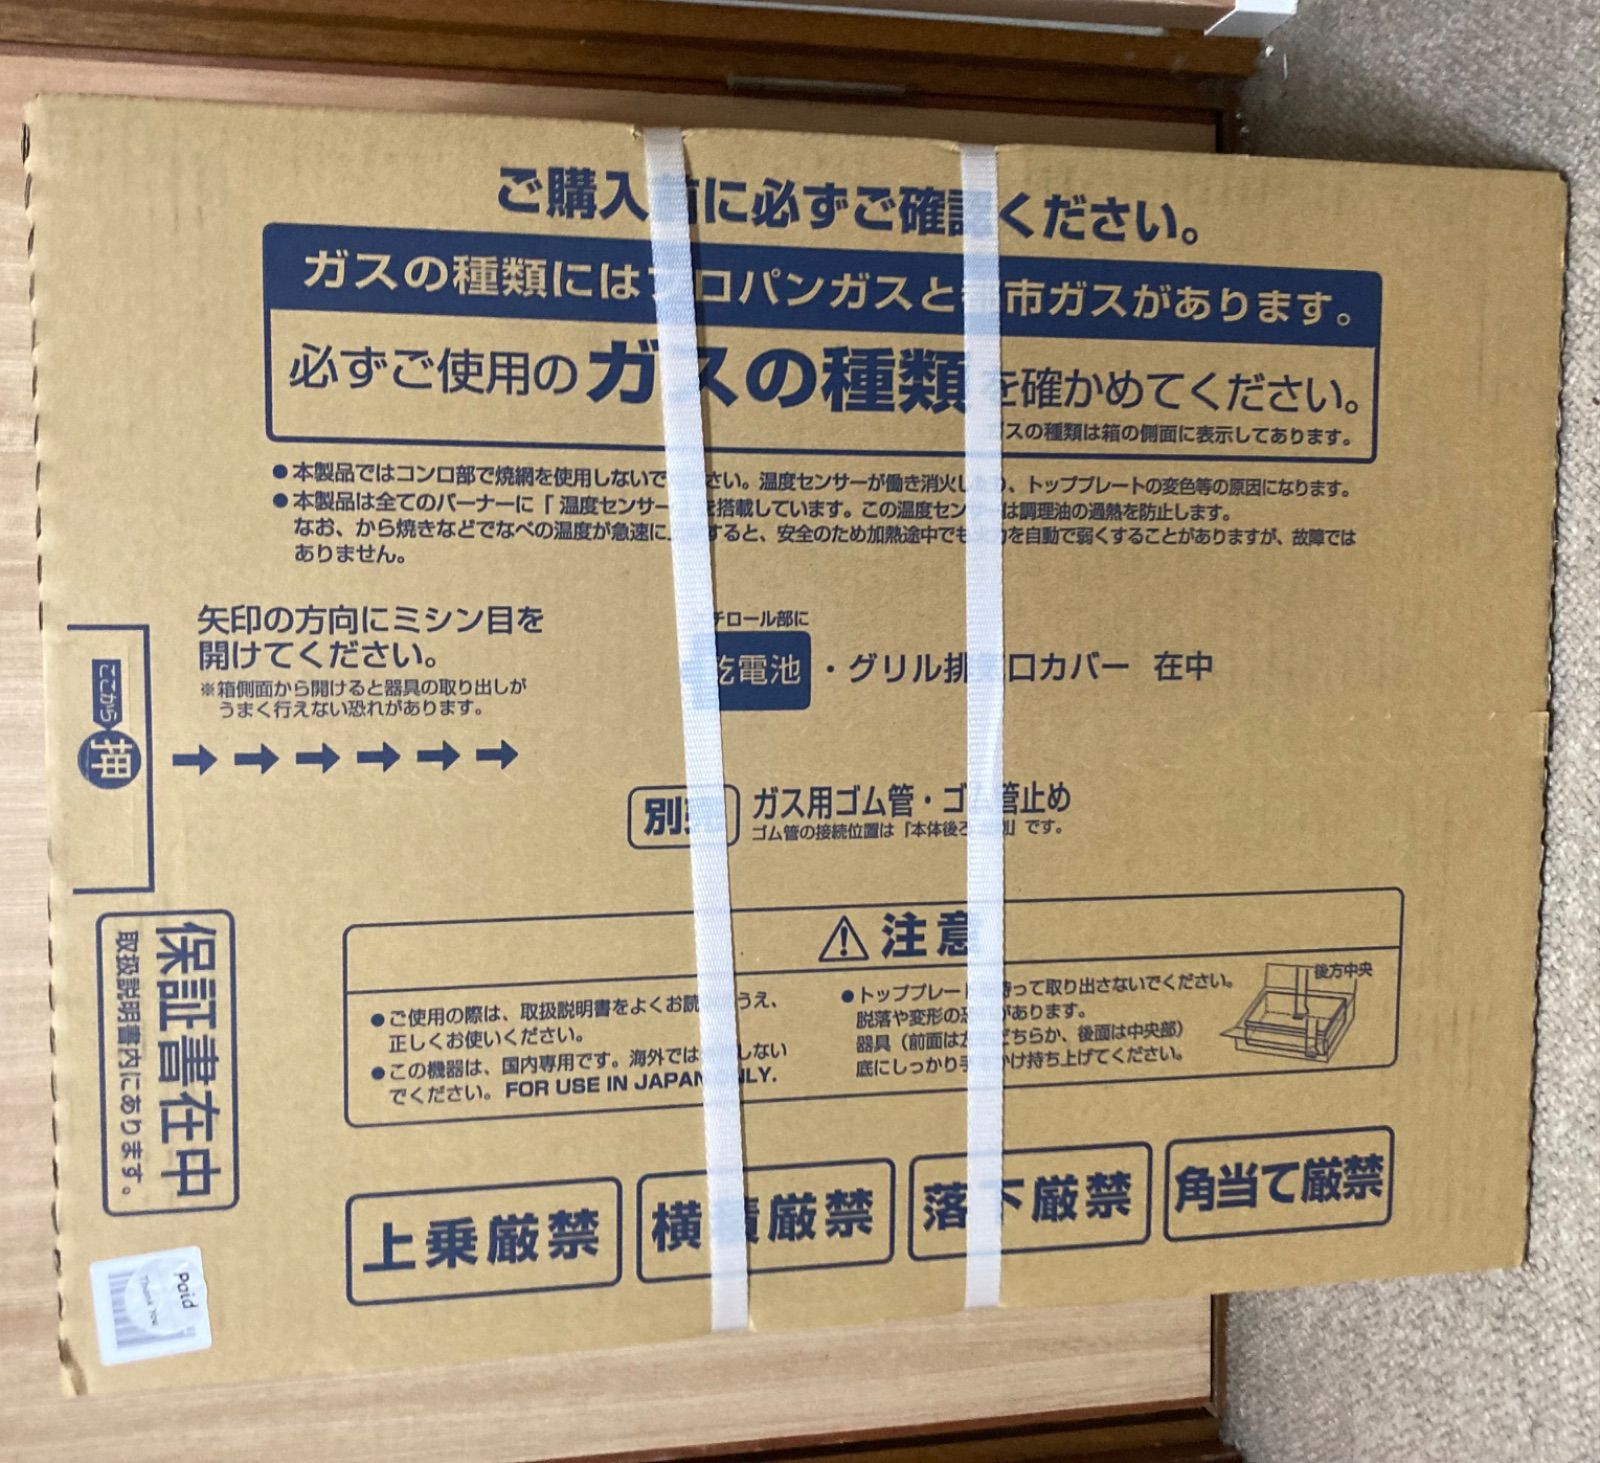 IC-S37-R プロパンガス用 パロマ ガステーブル haruko's shop メルカリ